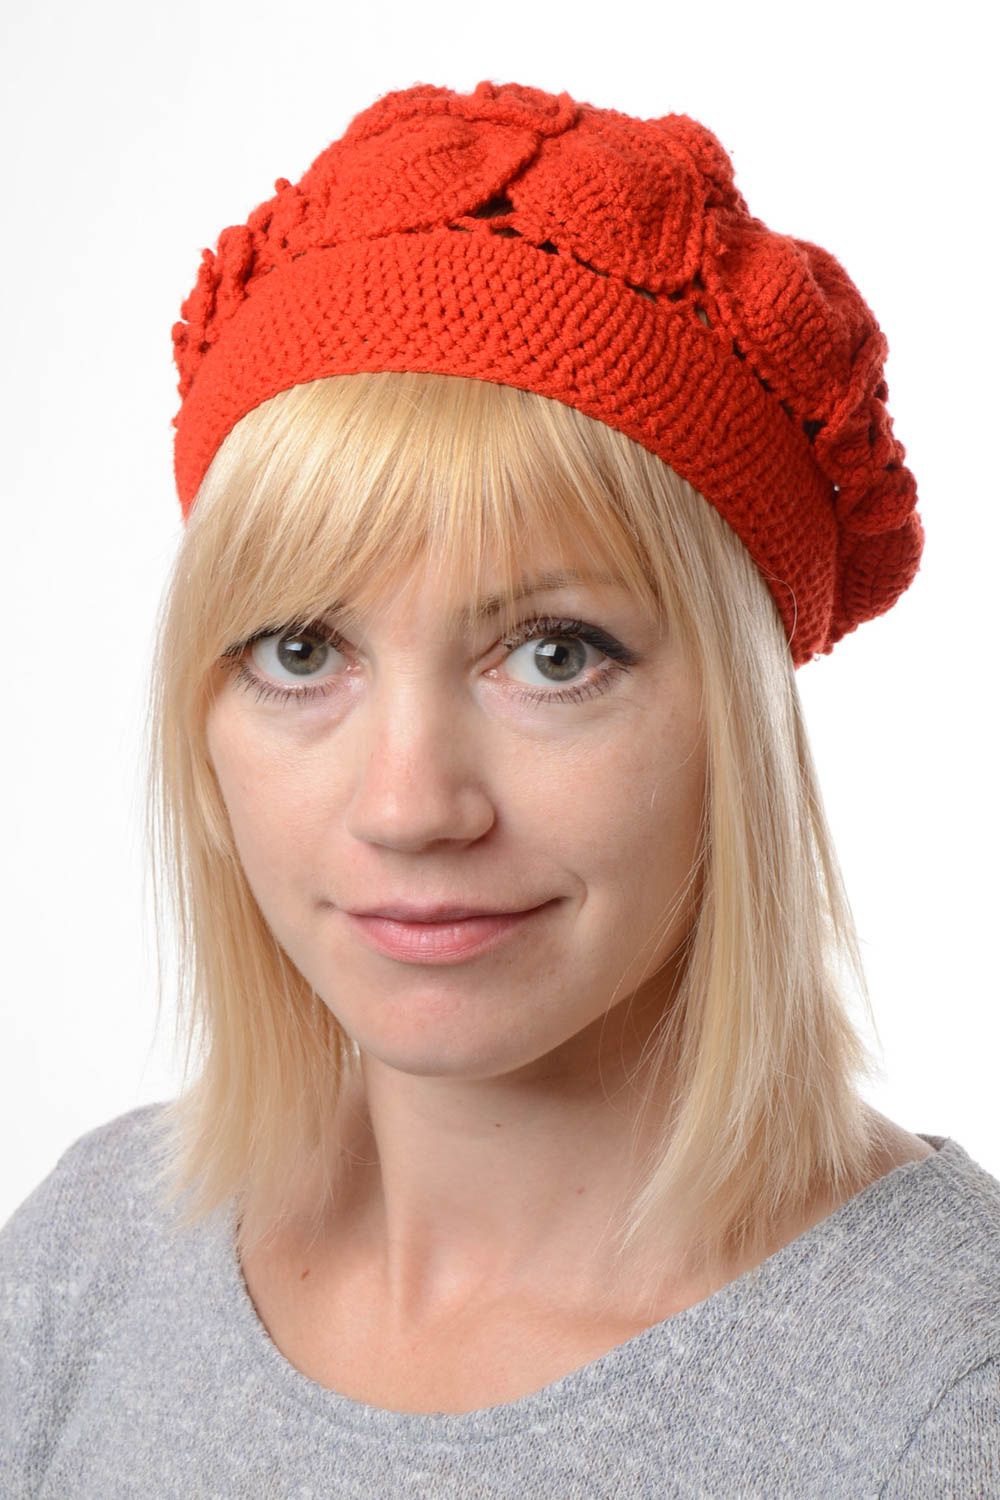 Winter hat for women handmade accessories crochet hat fashion hats gift ideas photo 1